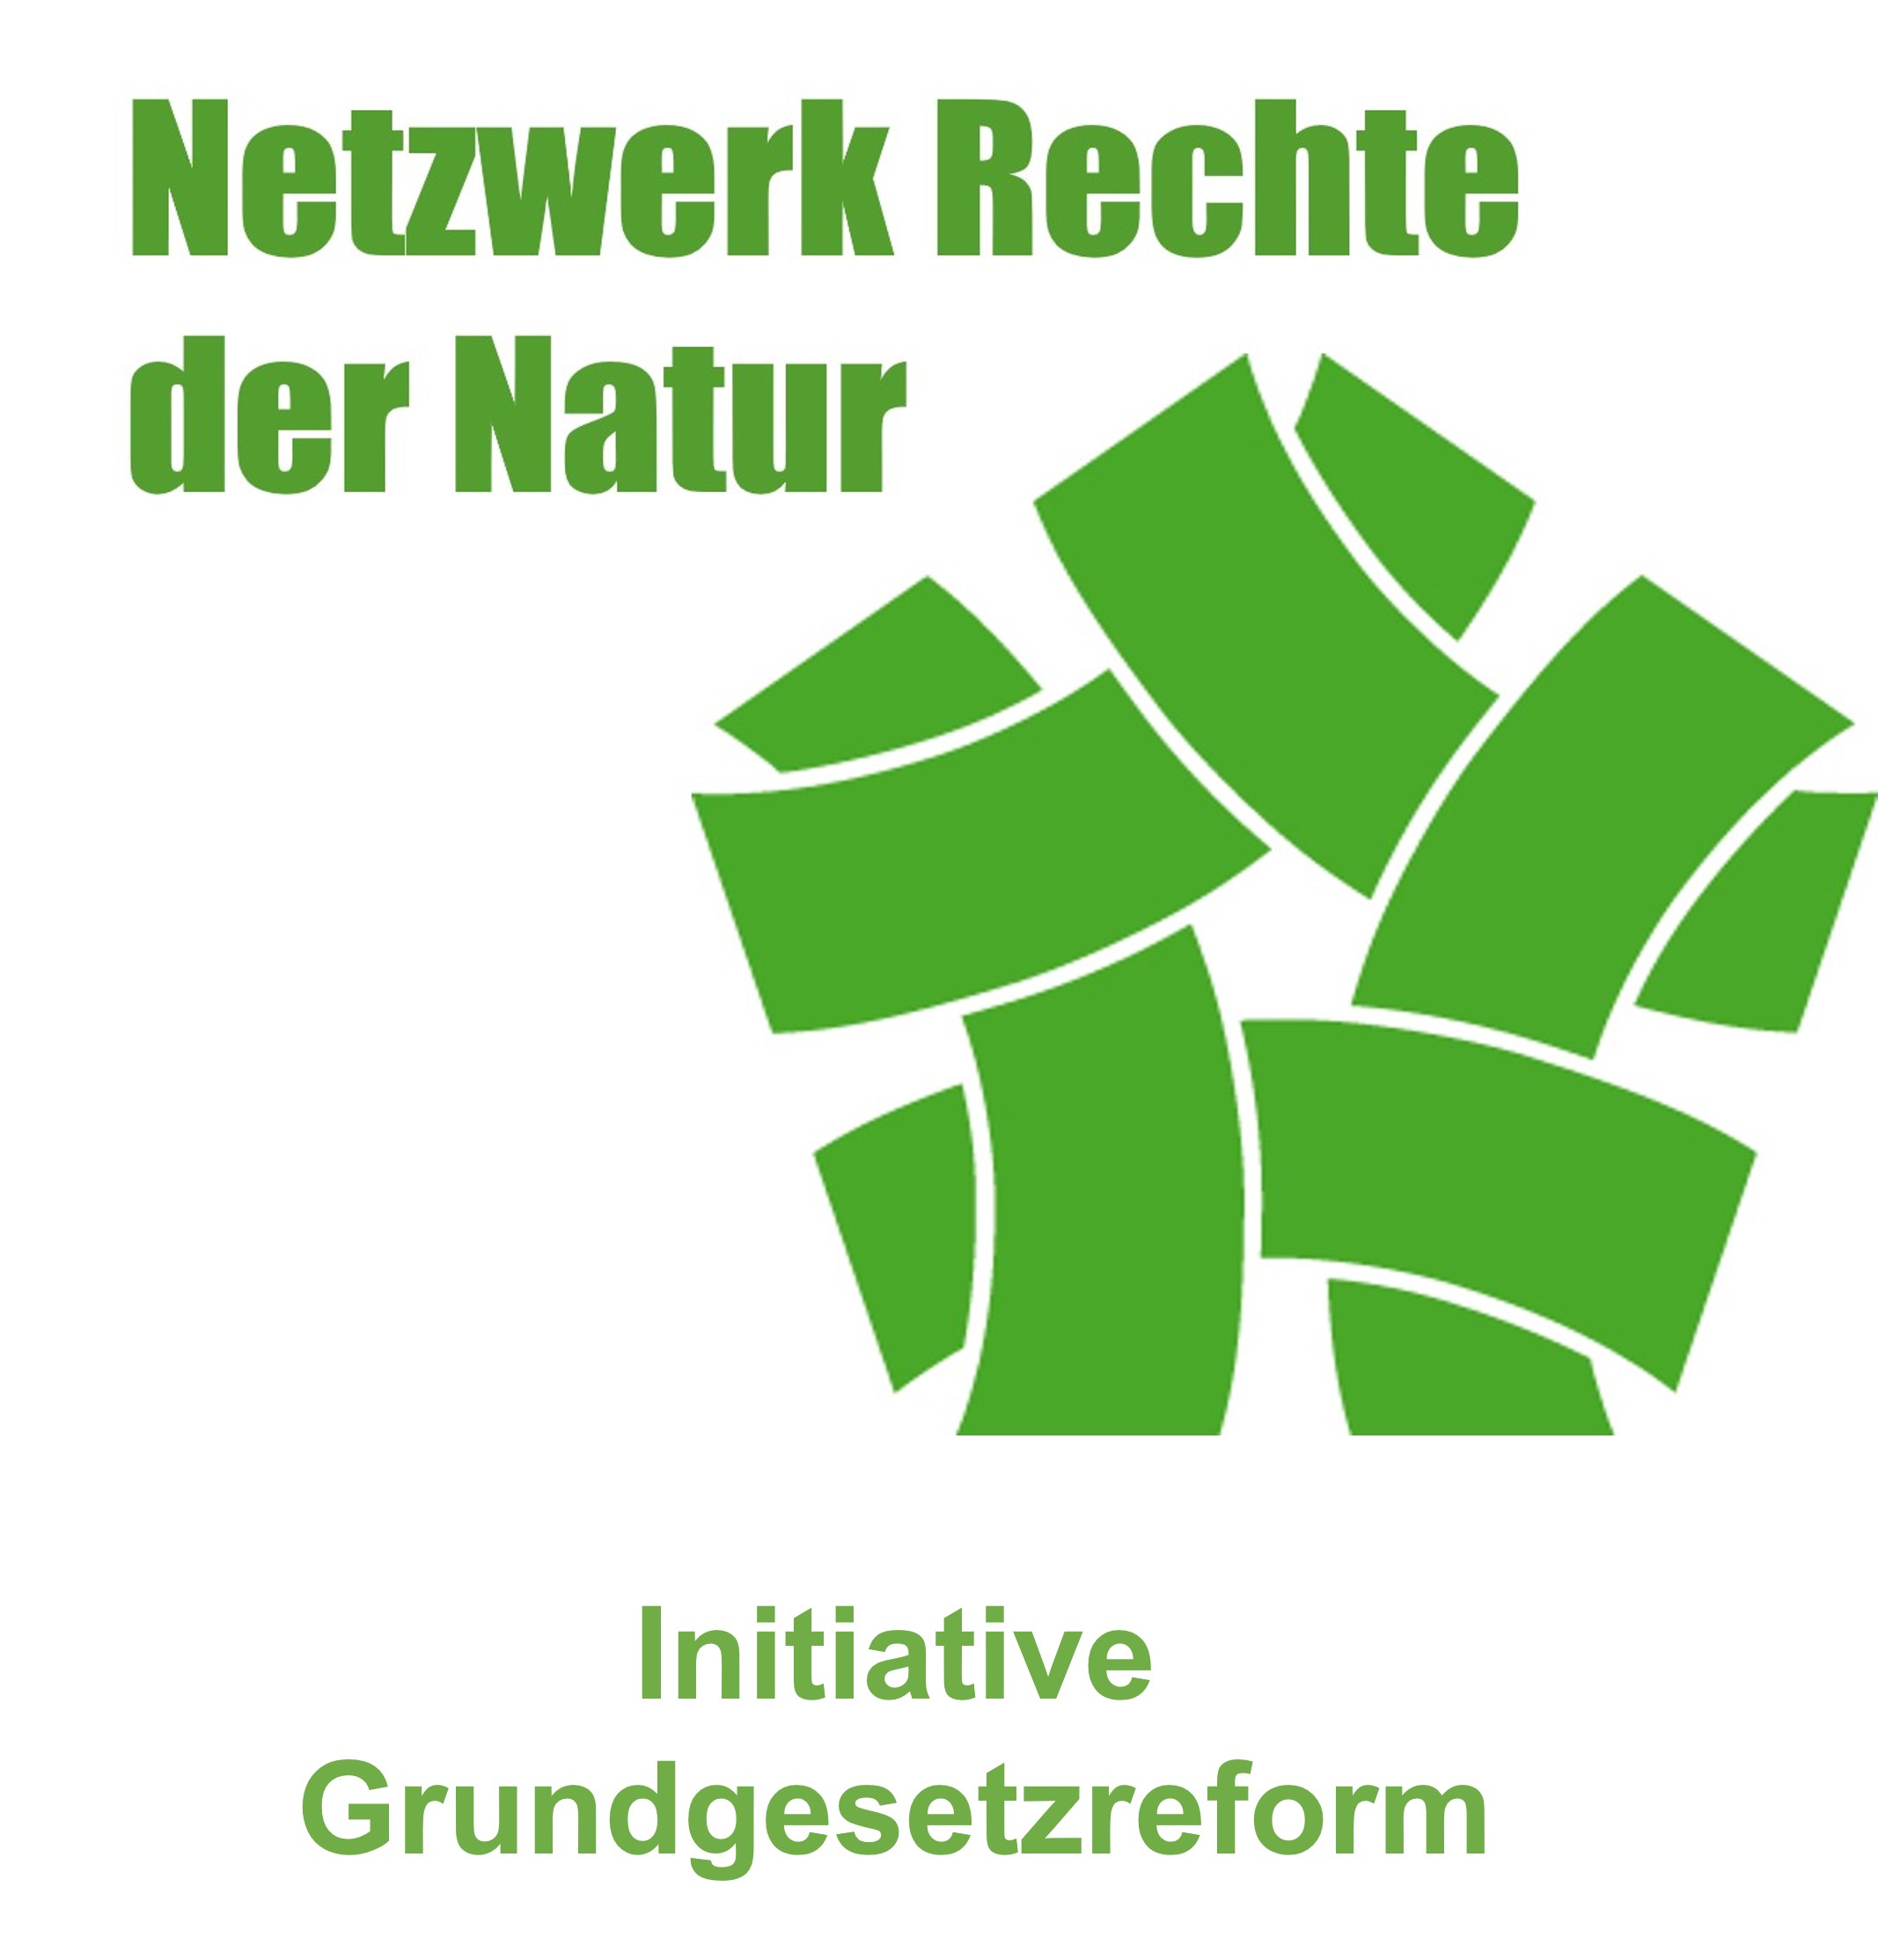 Netzwerk Rechte de Natur - Grundgesetzreform